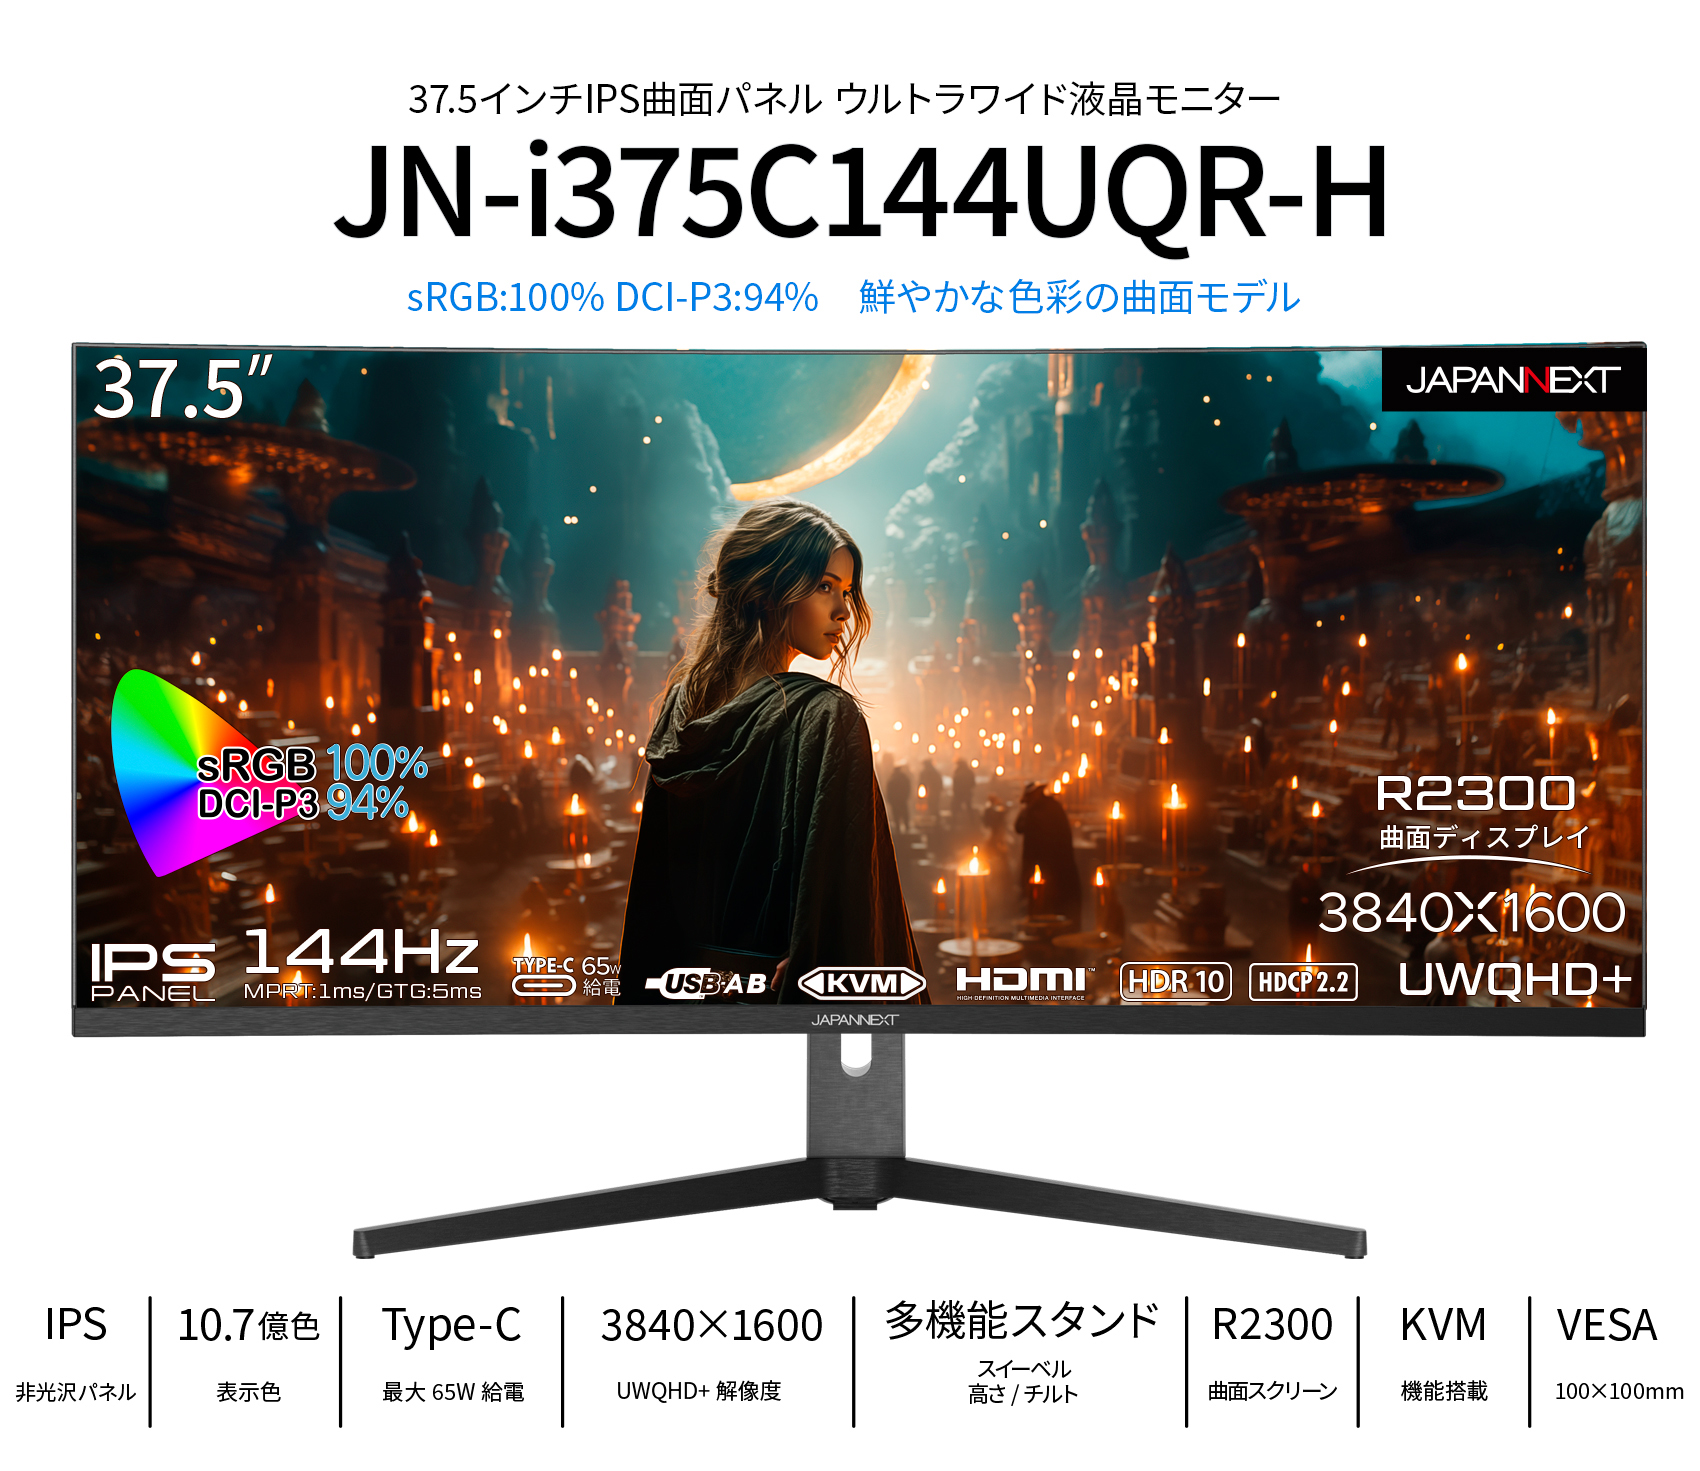 JAPANNEXT 37.5インチ曲面 IPSパネル UWQHD+(3840 x 1600 